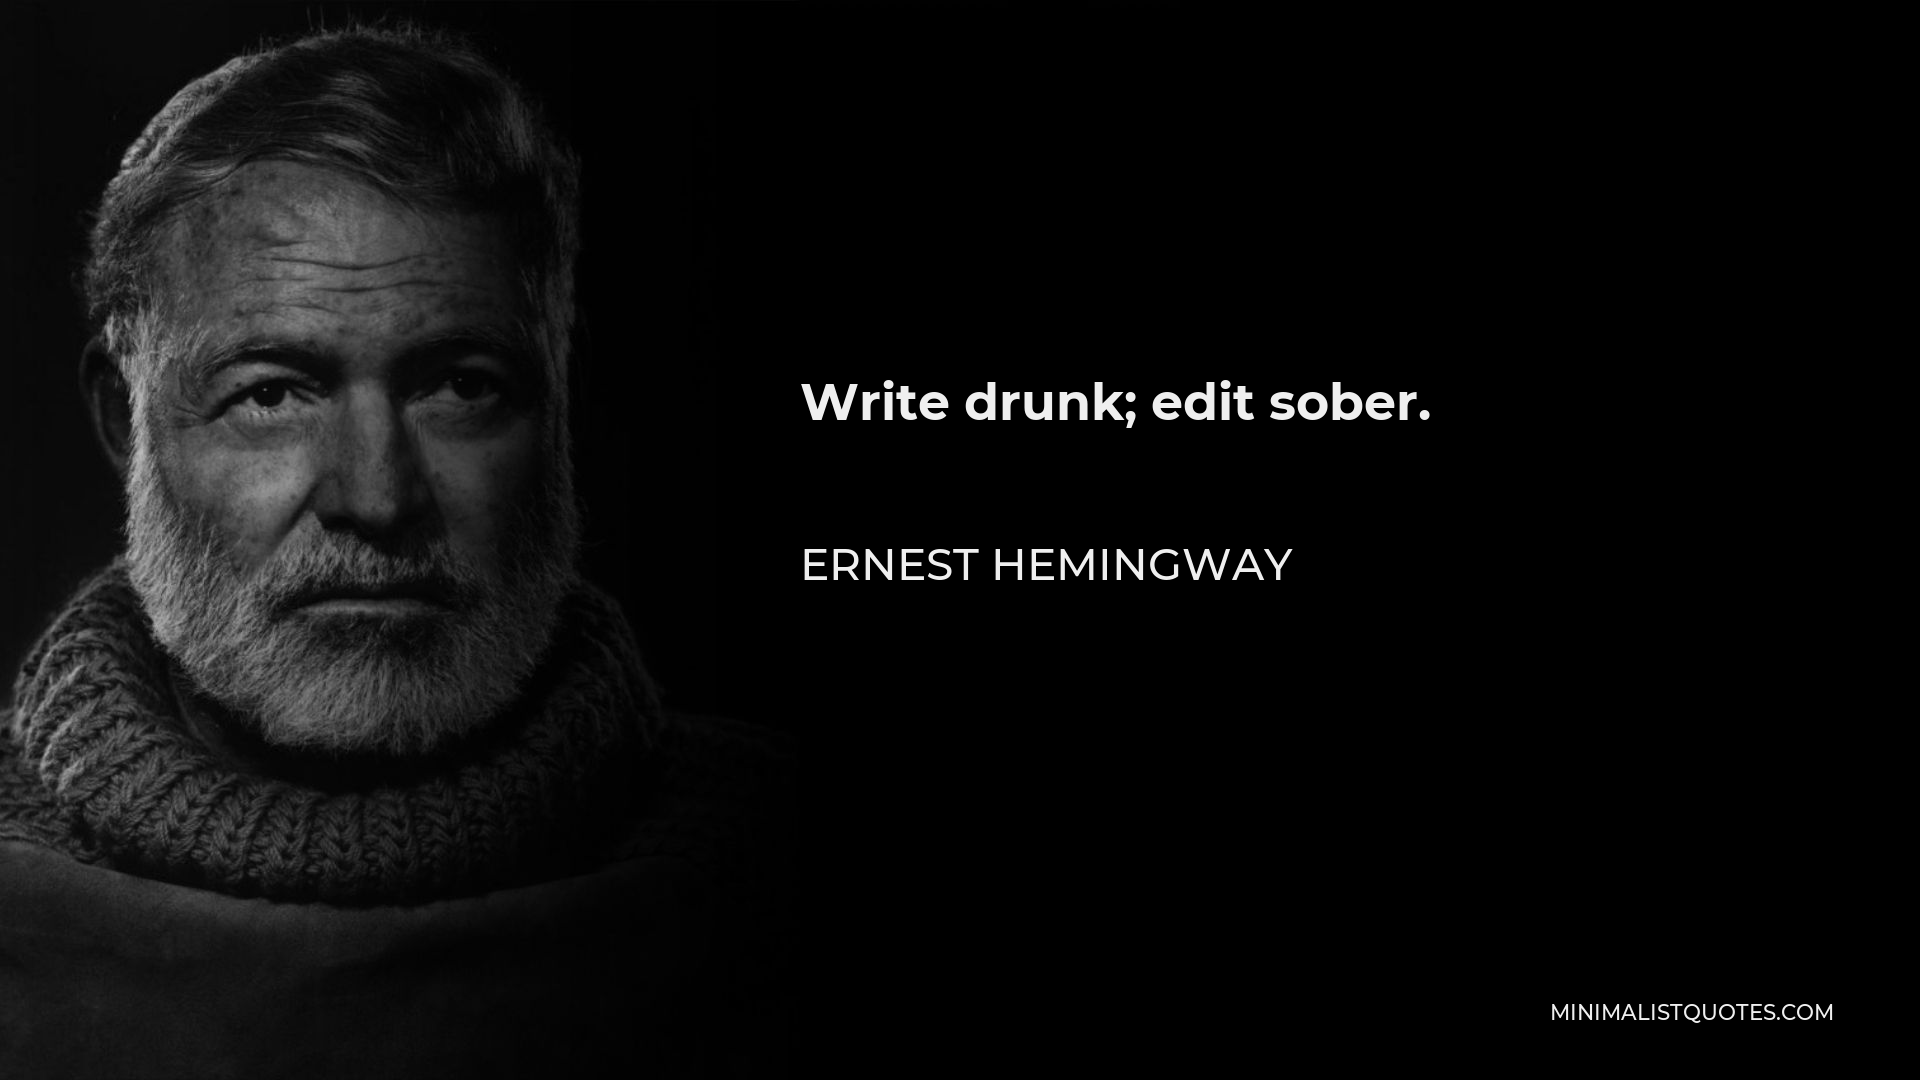 Ernest Hemingway Quote - Write drunk; edit sober.